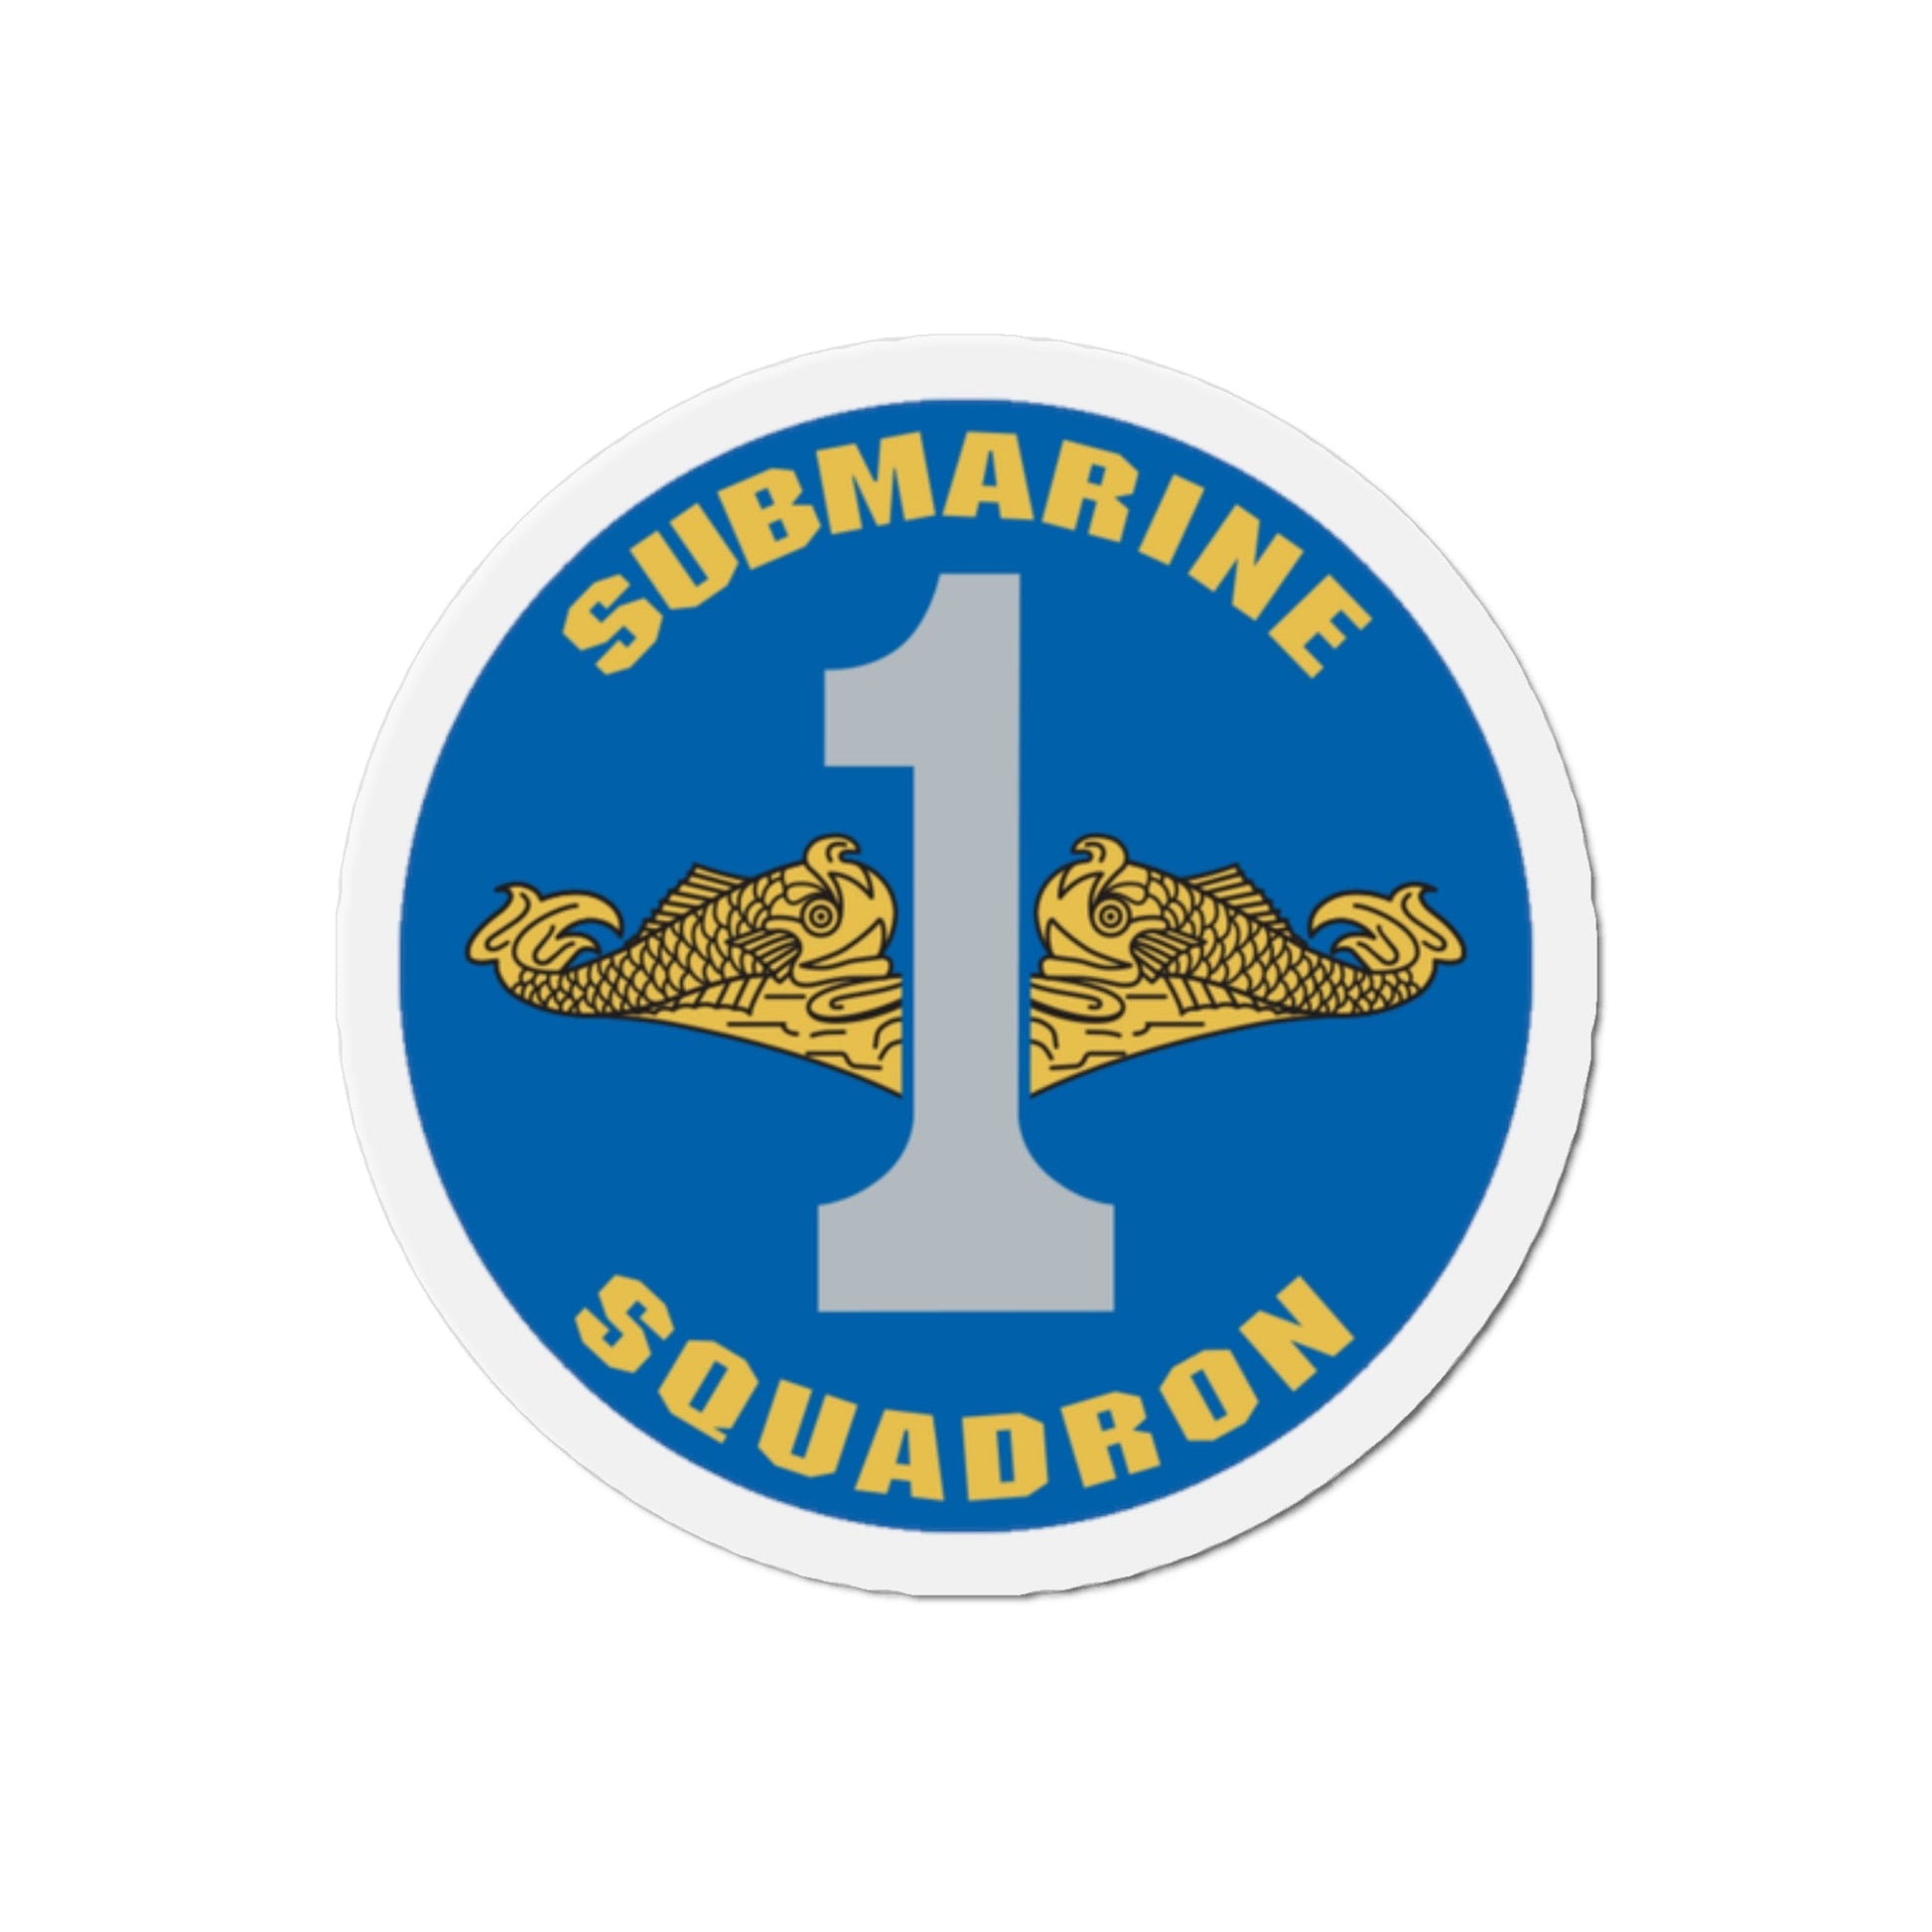 CSS 1 Gold Commander Submarine Squadron 1 (U.S. Navy) Die-Cut